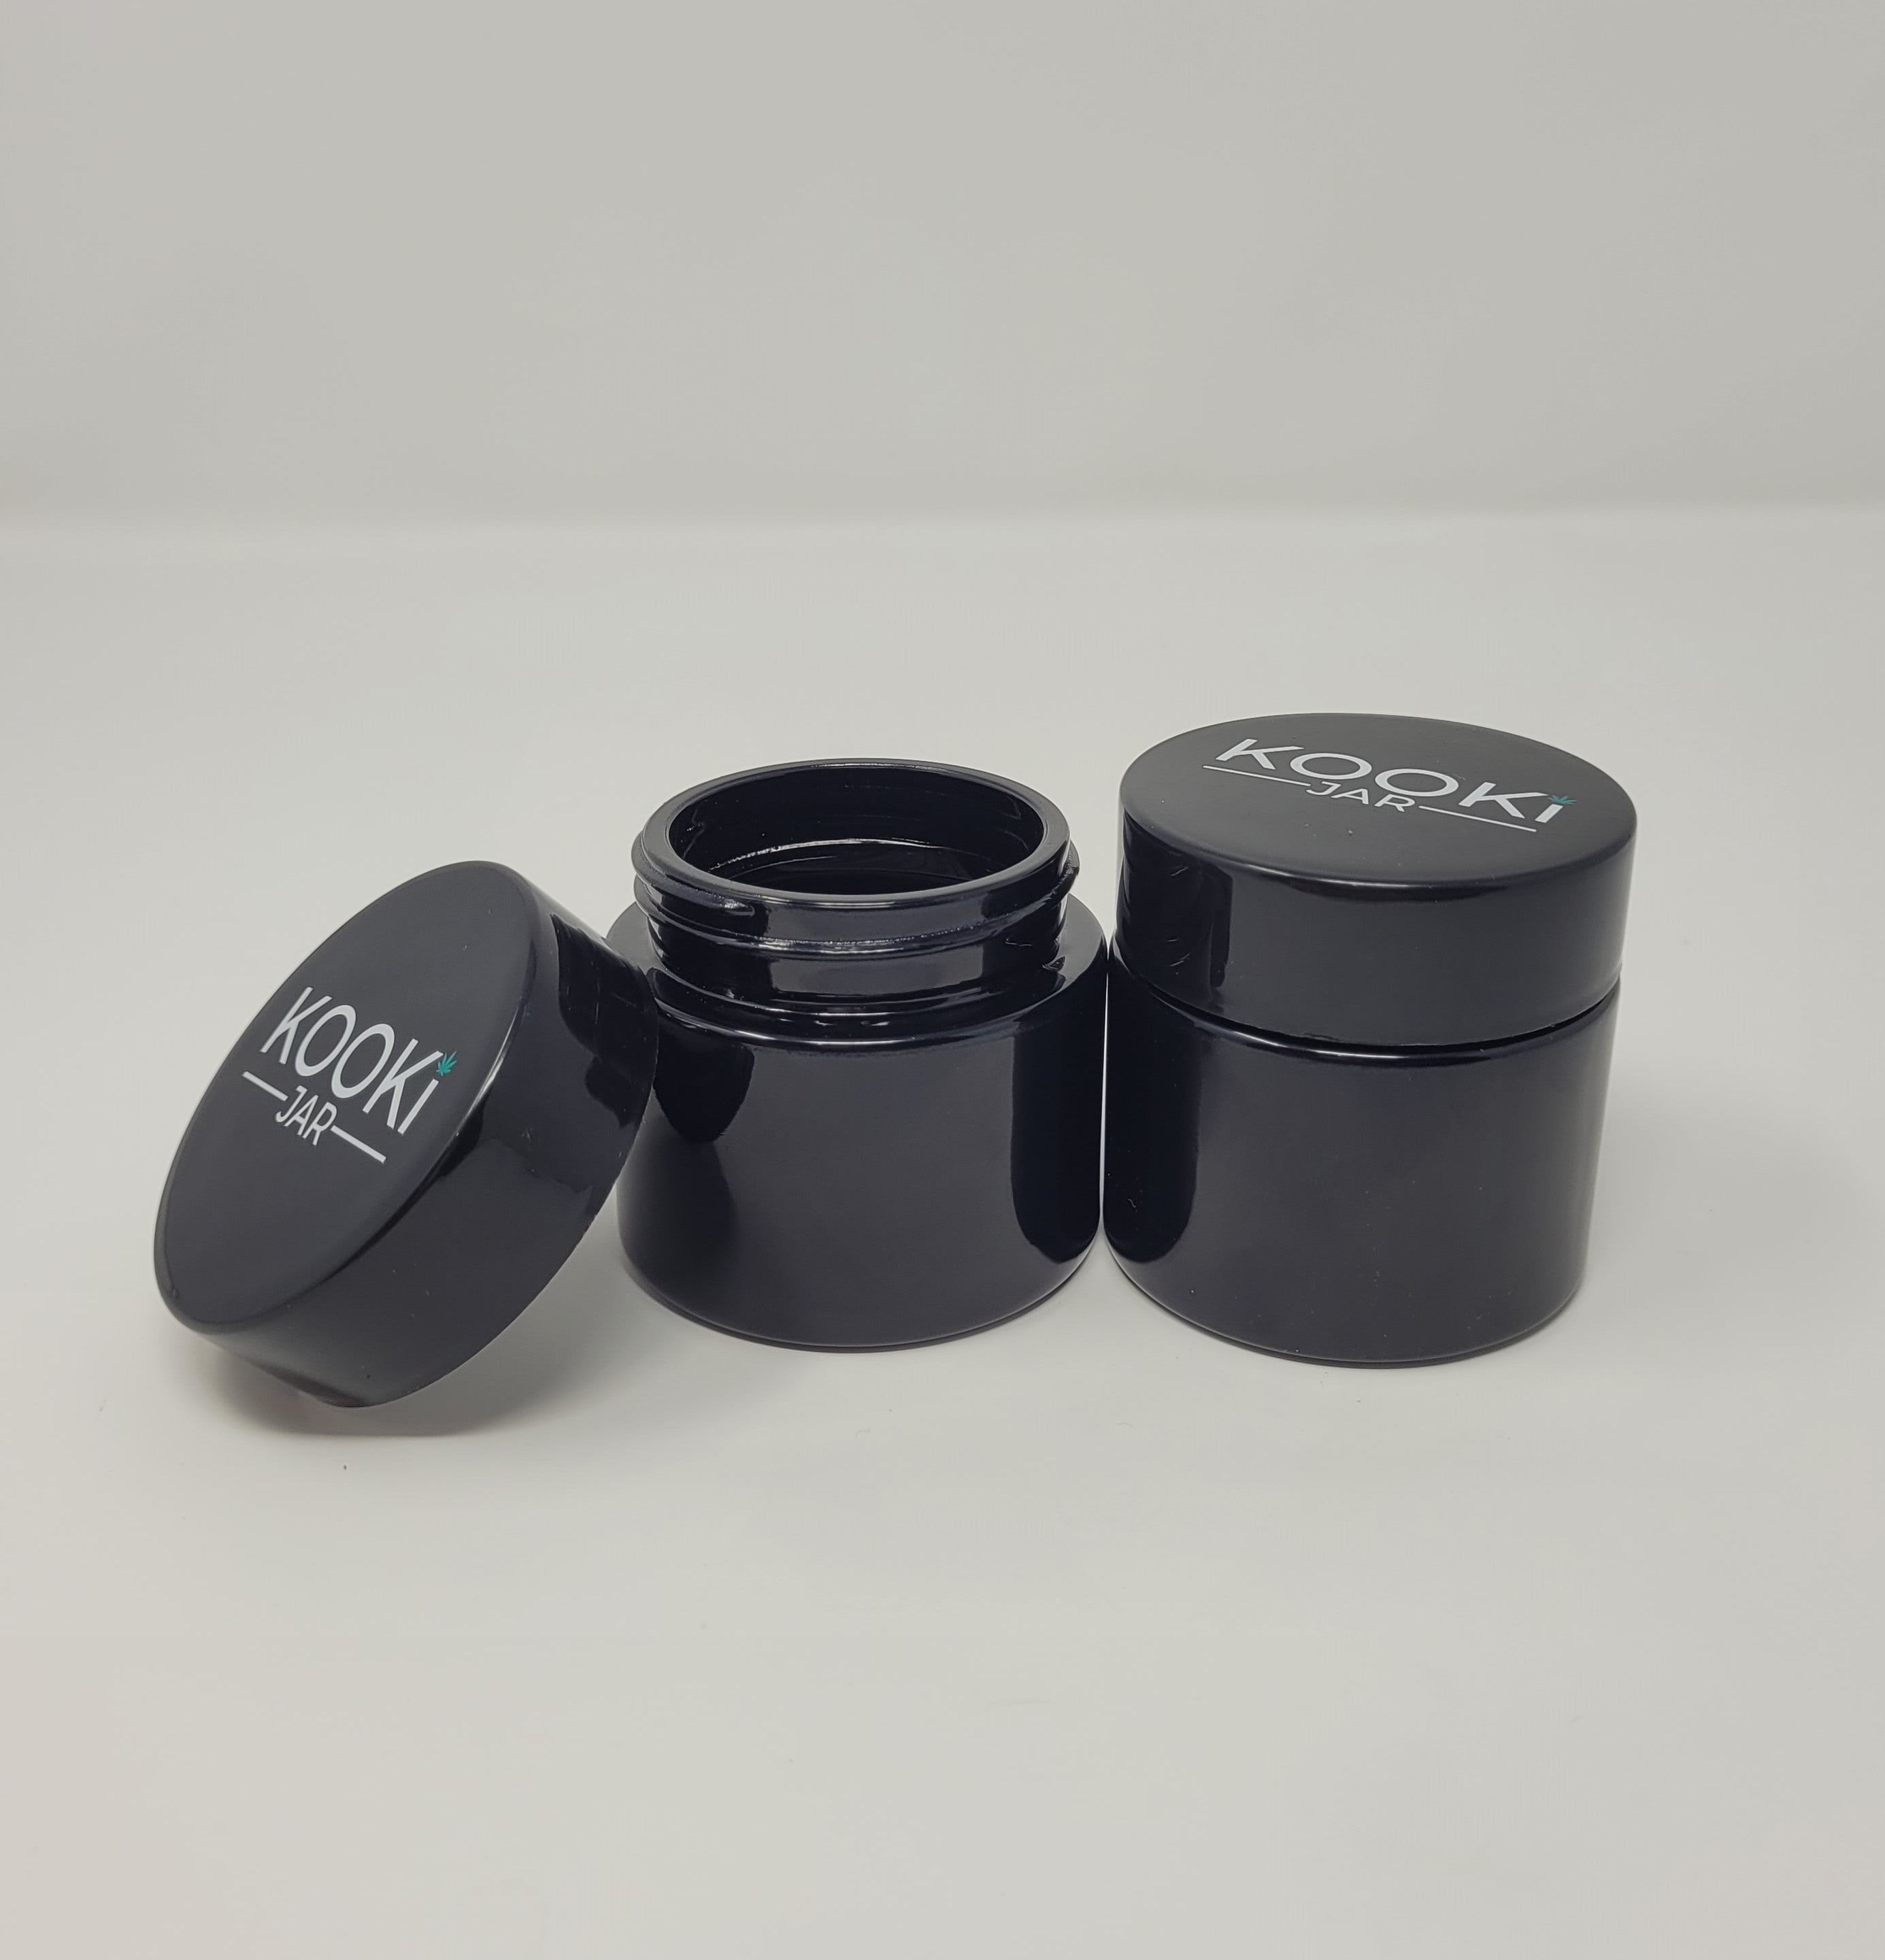 KookiJar CR | Child Resistant UV Glass Jar